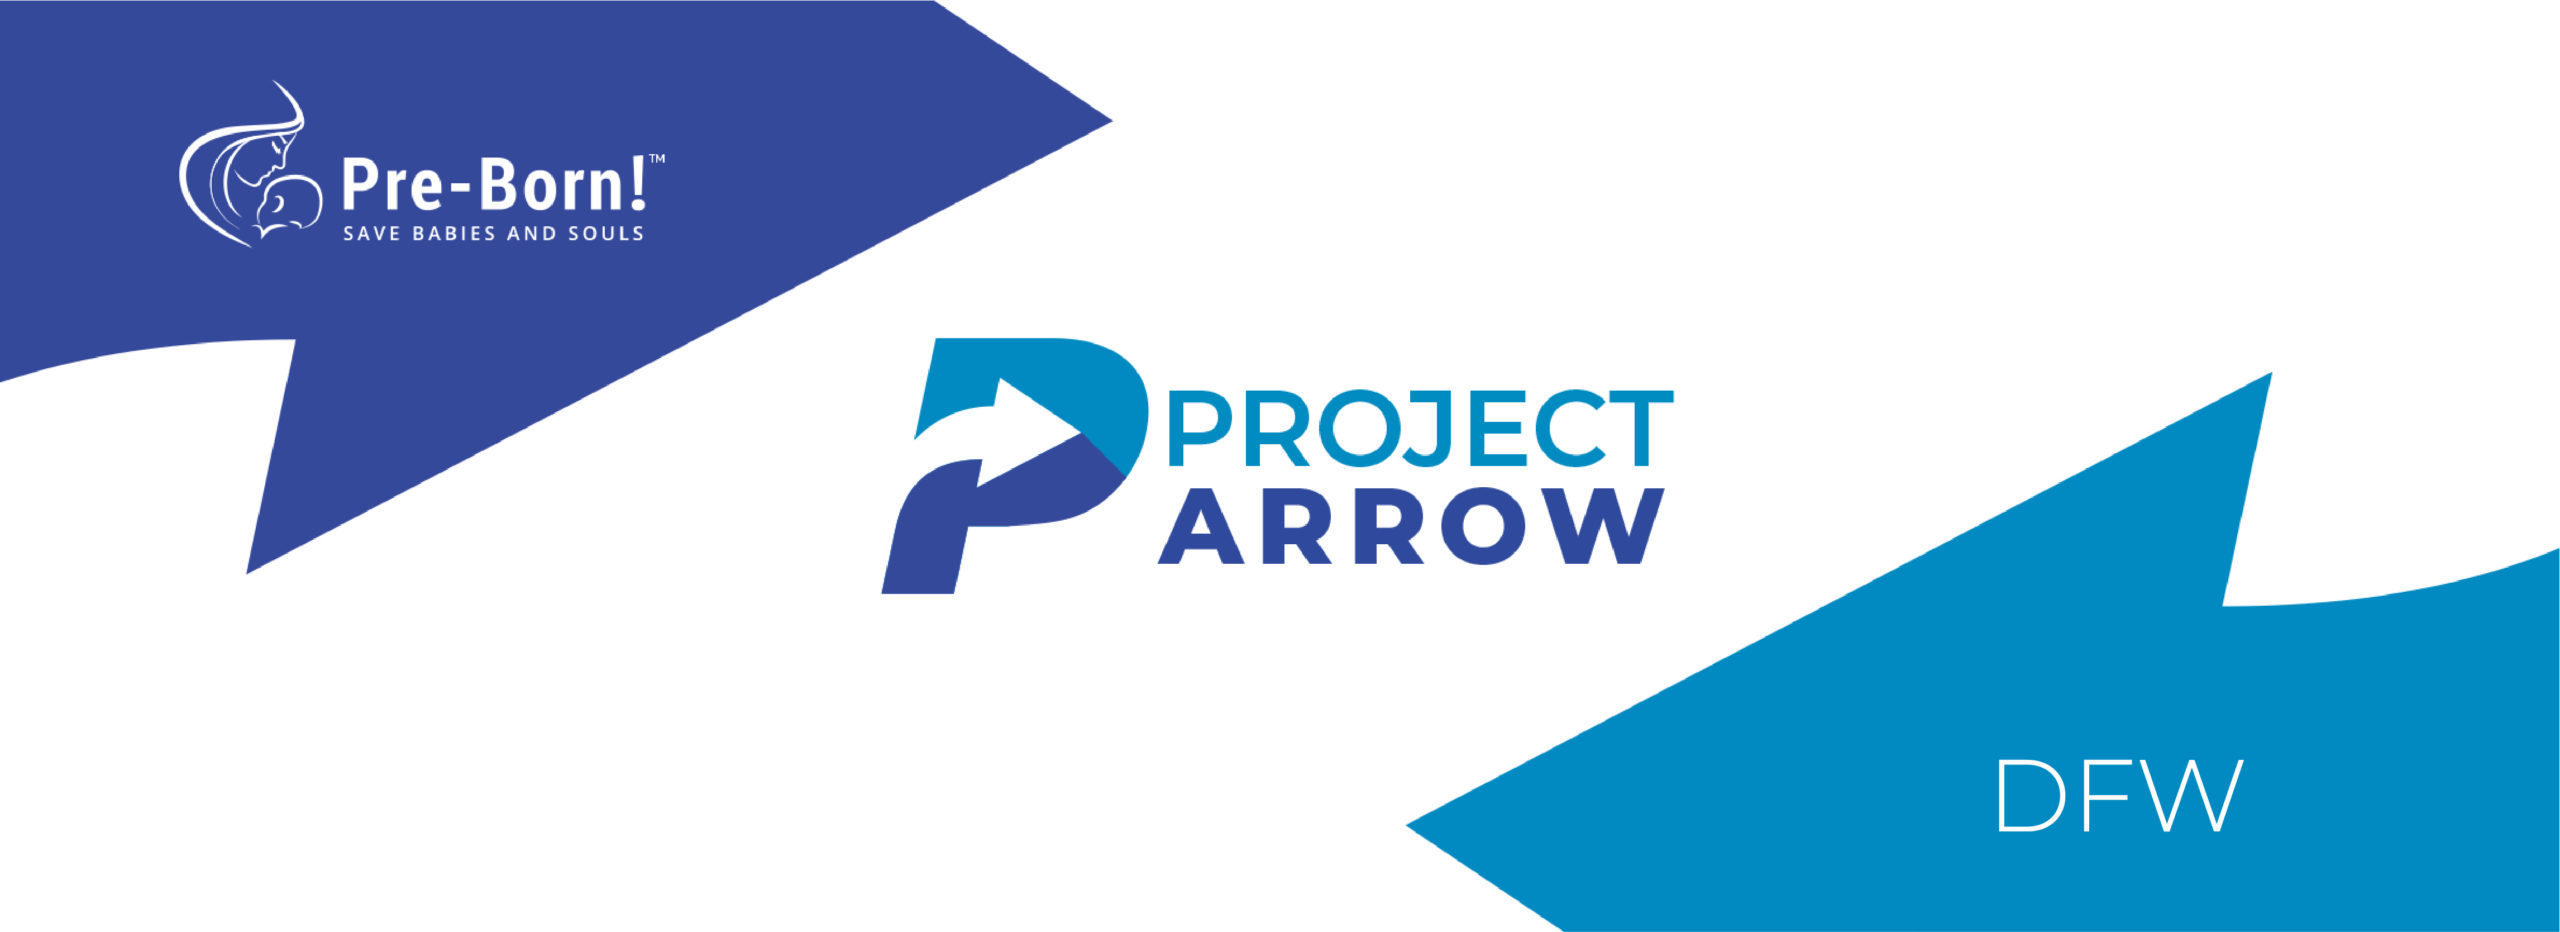 Project Arrow DFW Banner